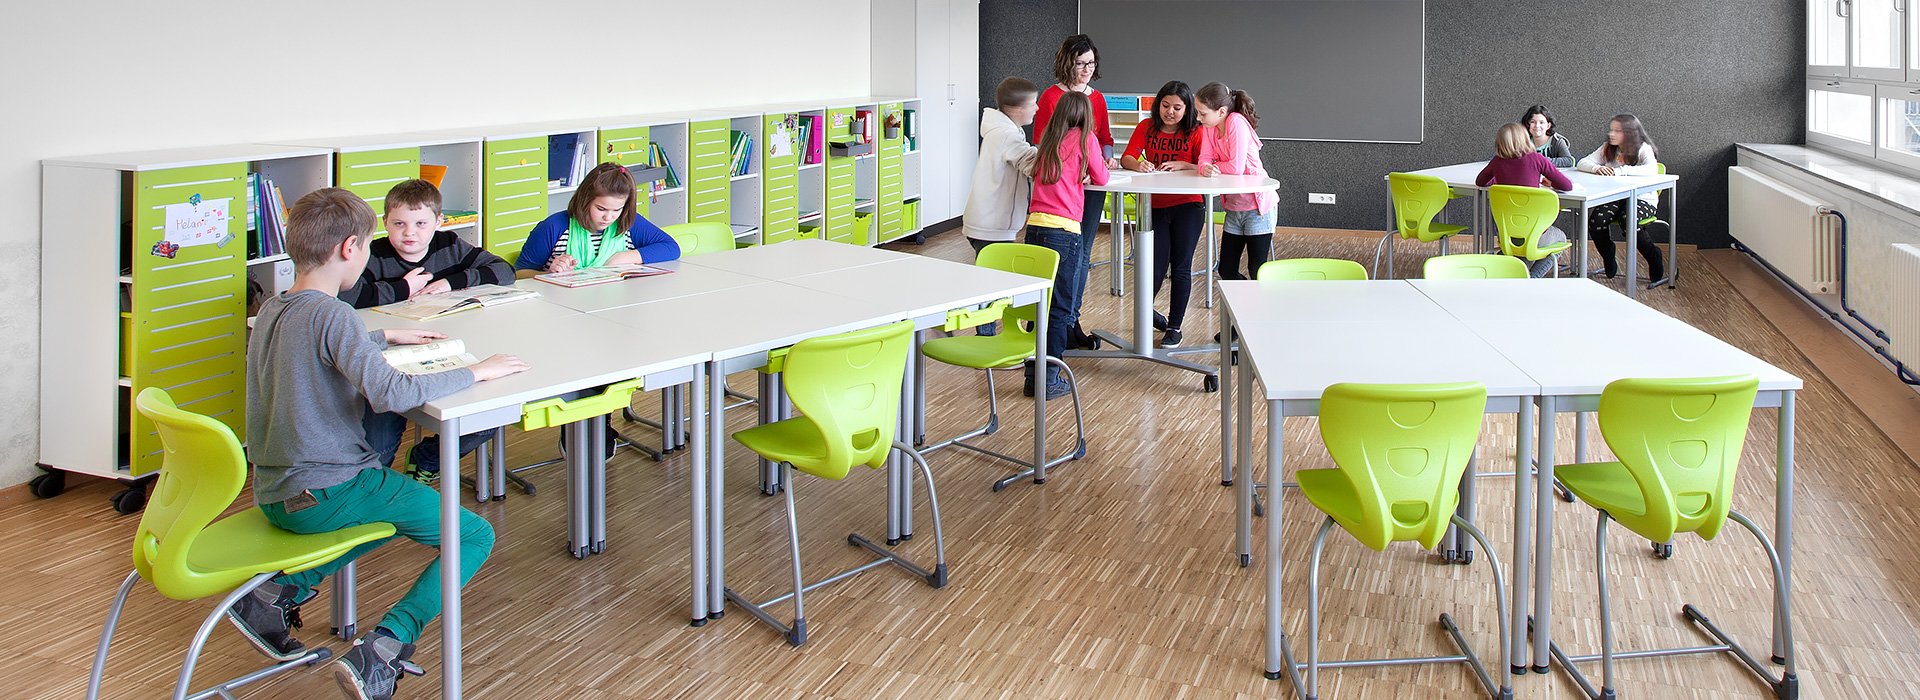 salle de classe flexible - interaction